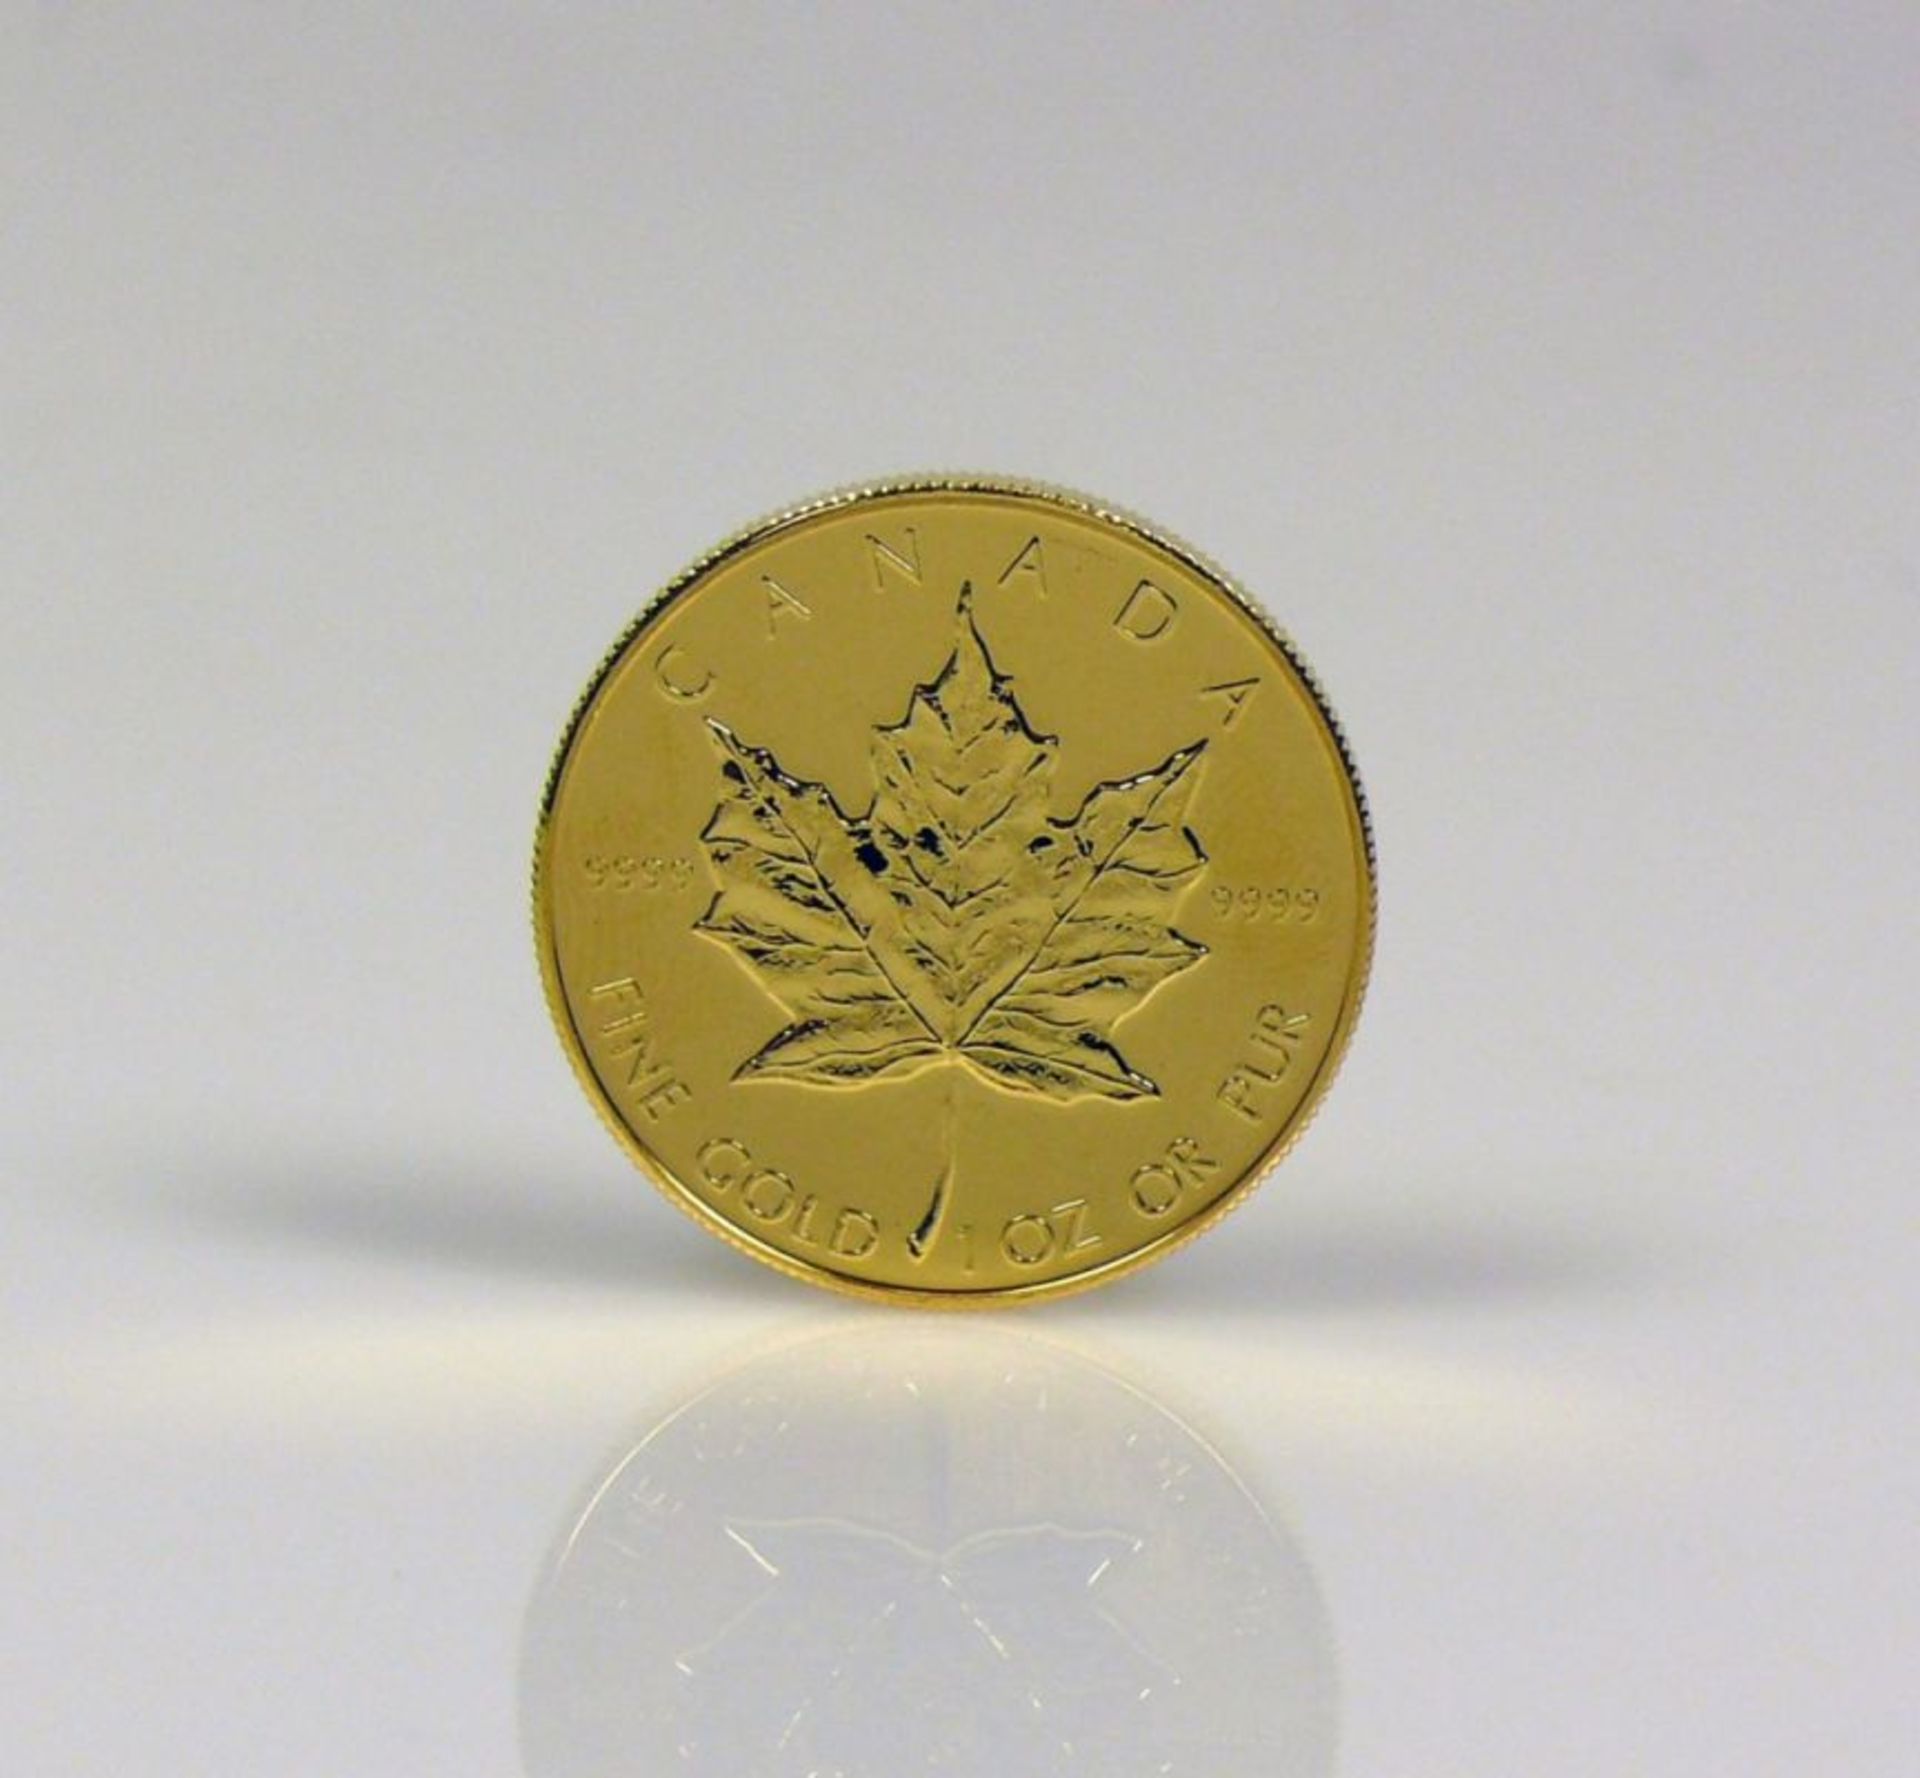 Goldmünze50 Dollars 1985, Elisabeth II, Canada; ss - Image 2 of 2